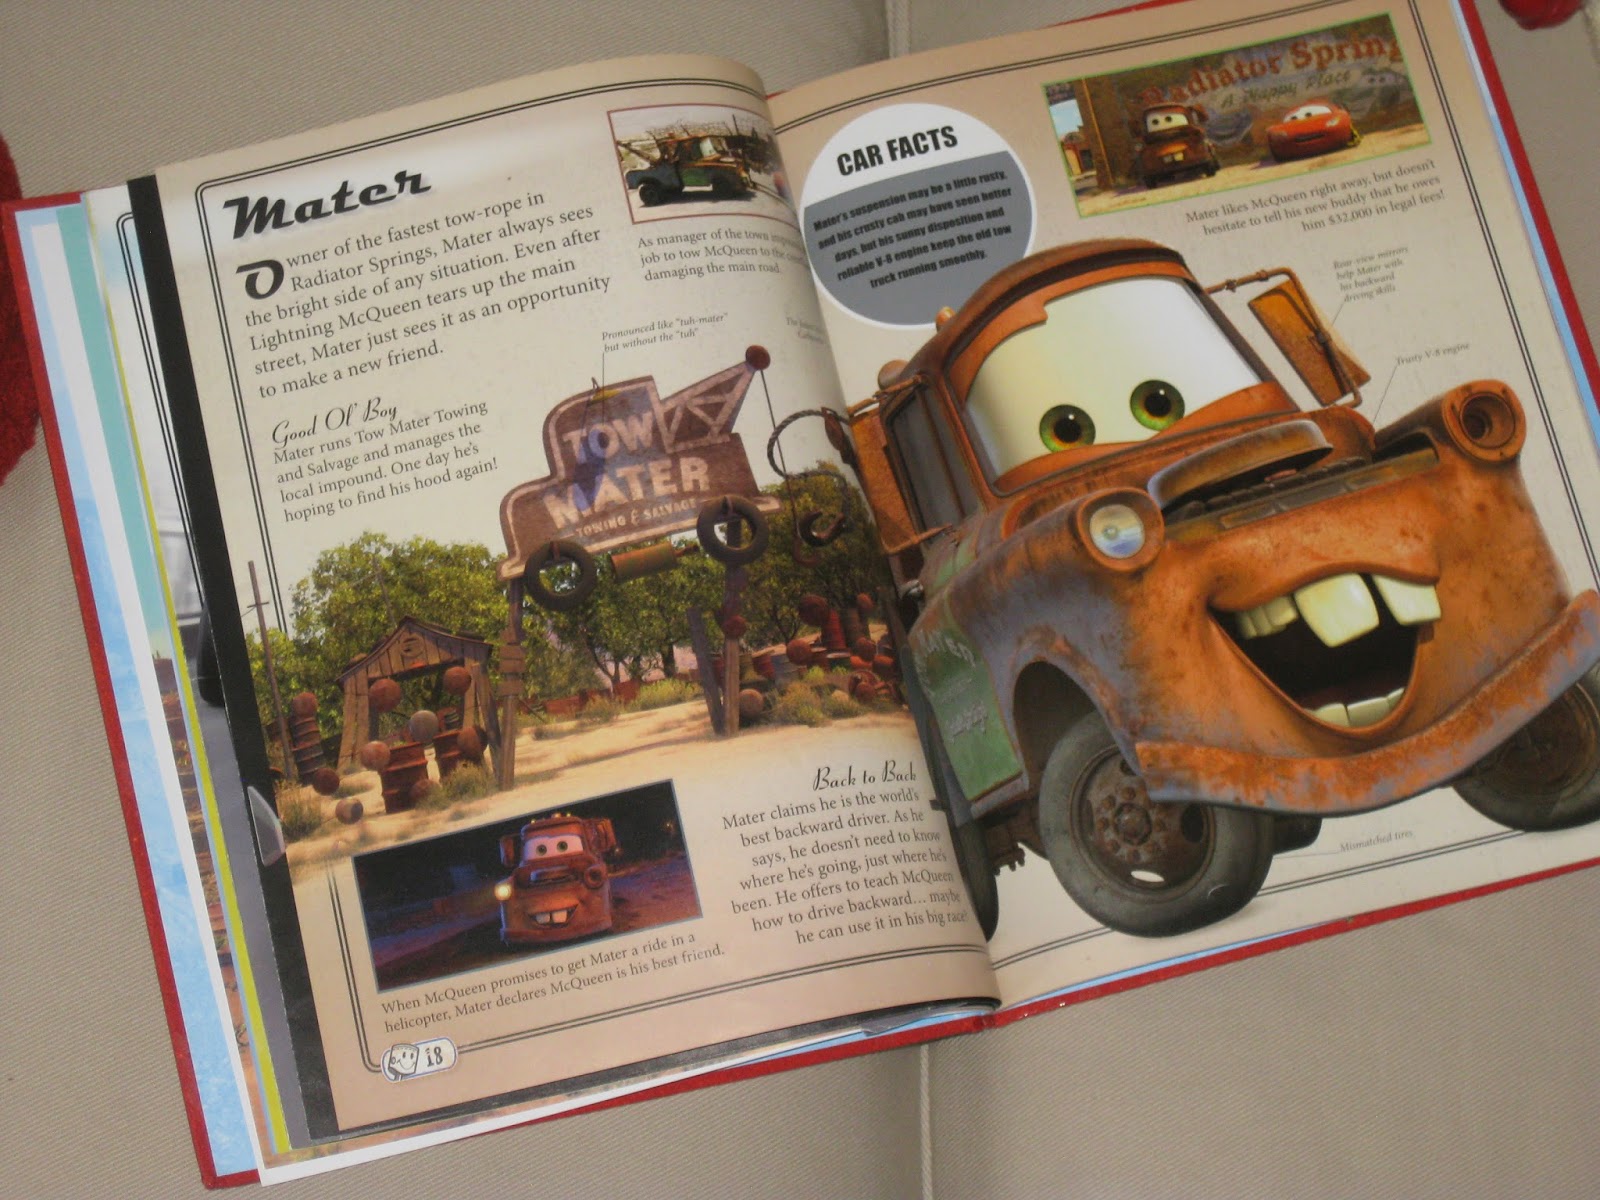 Dan the Pixar Fan: Cars: Transforming Lightning Mcqueen